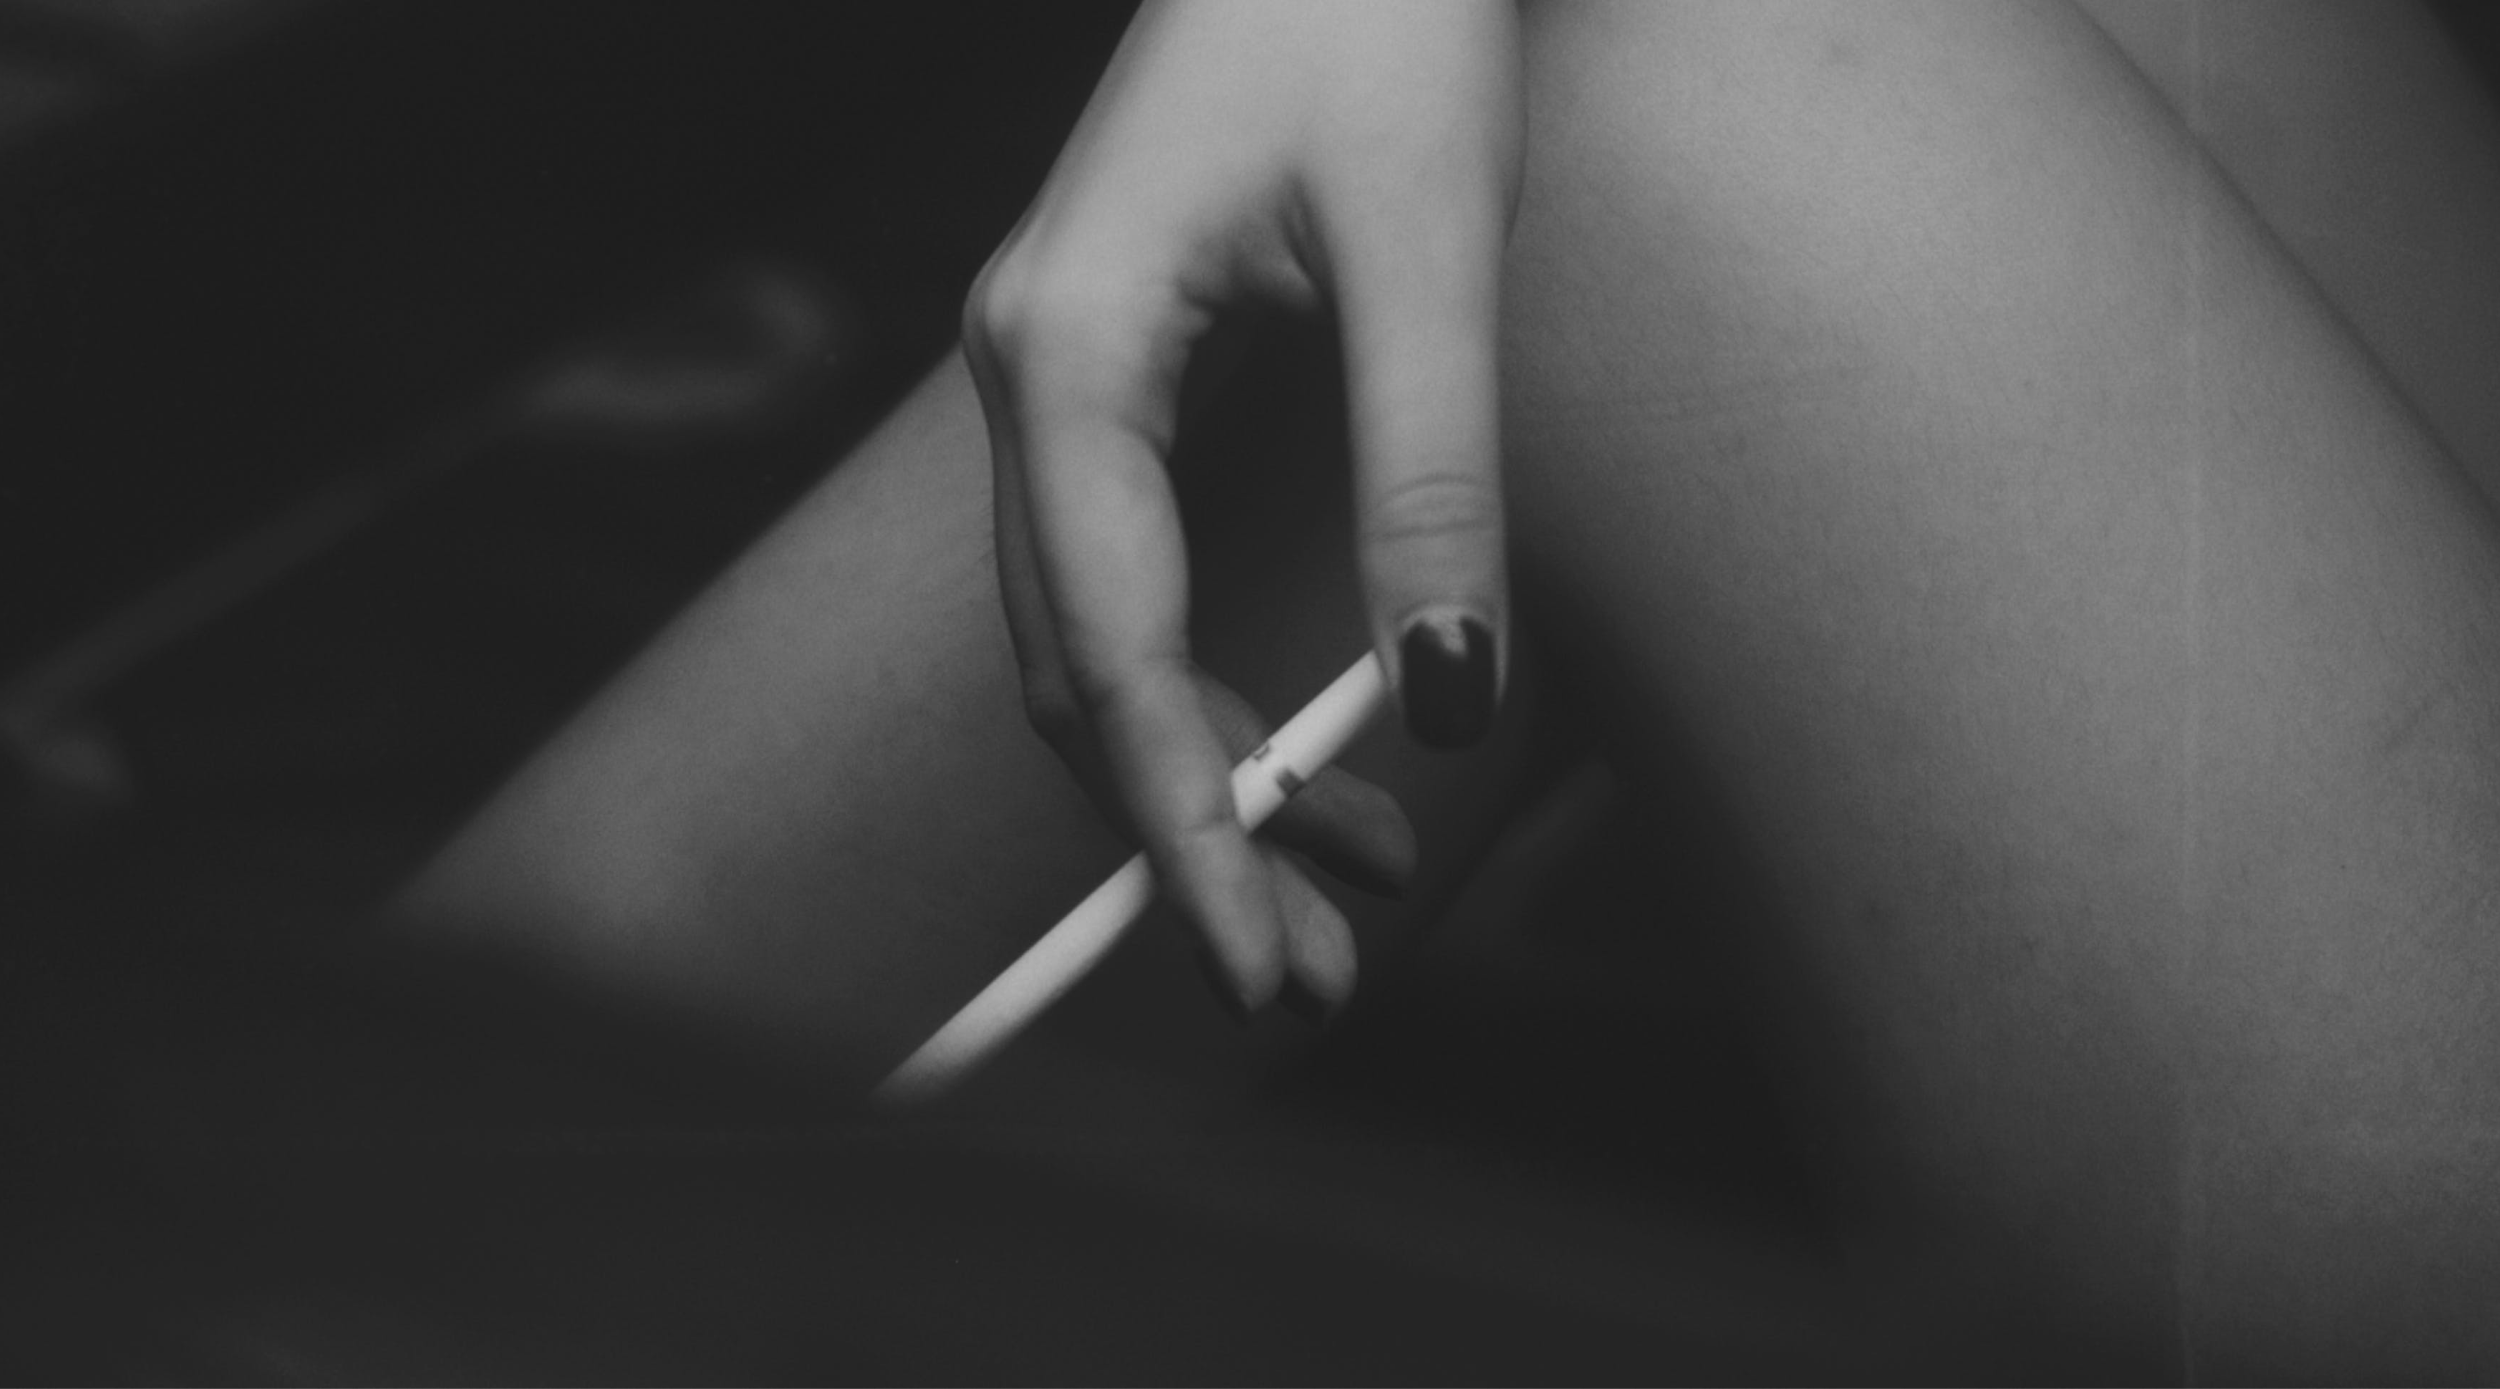 Hand holding an unlit cigarette